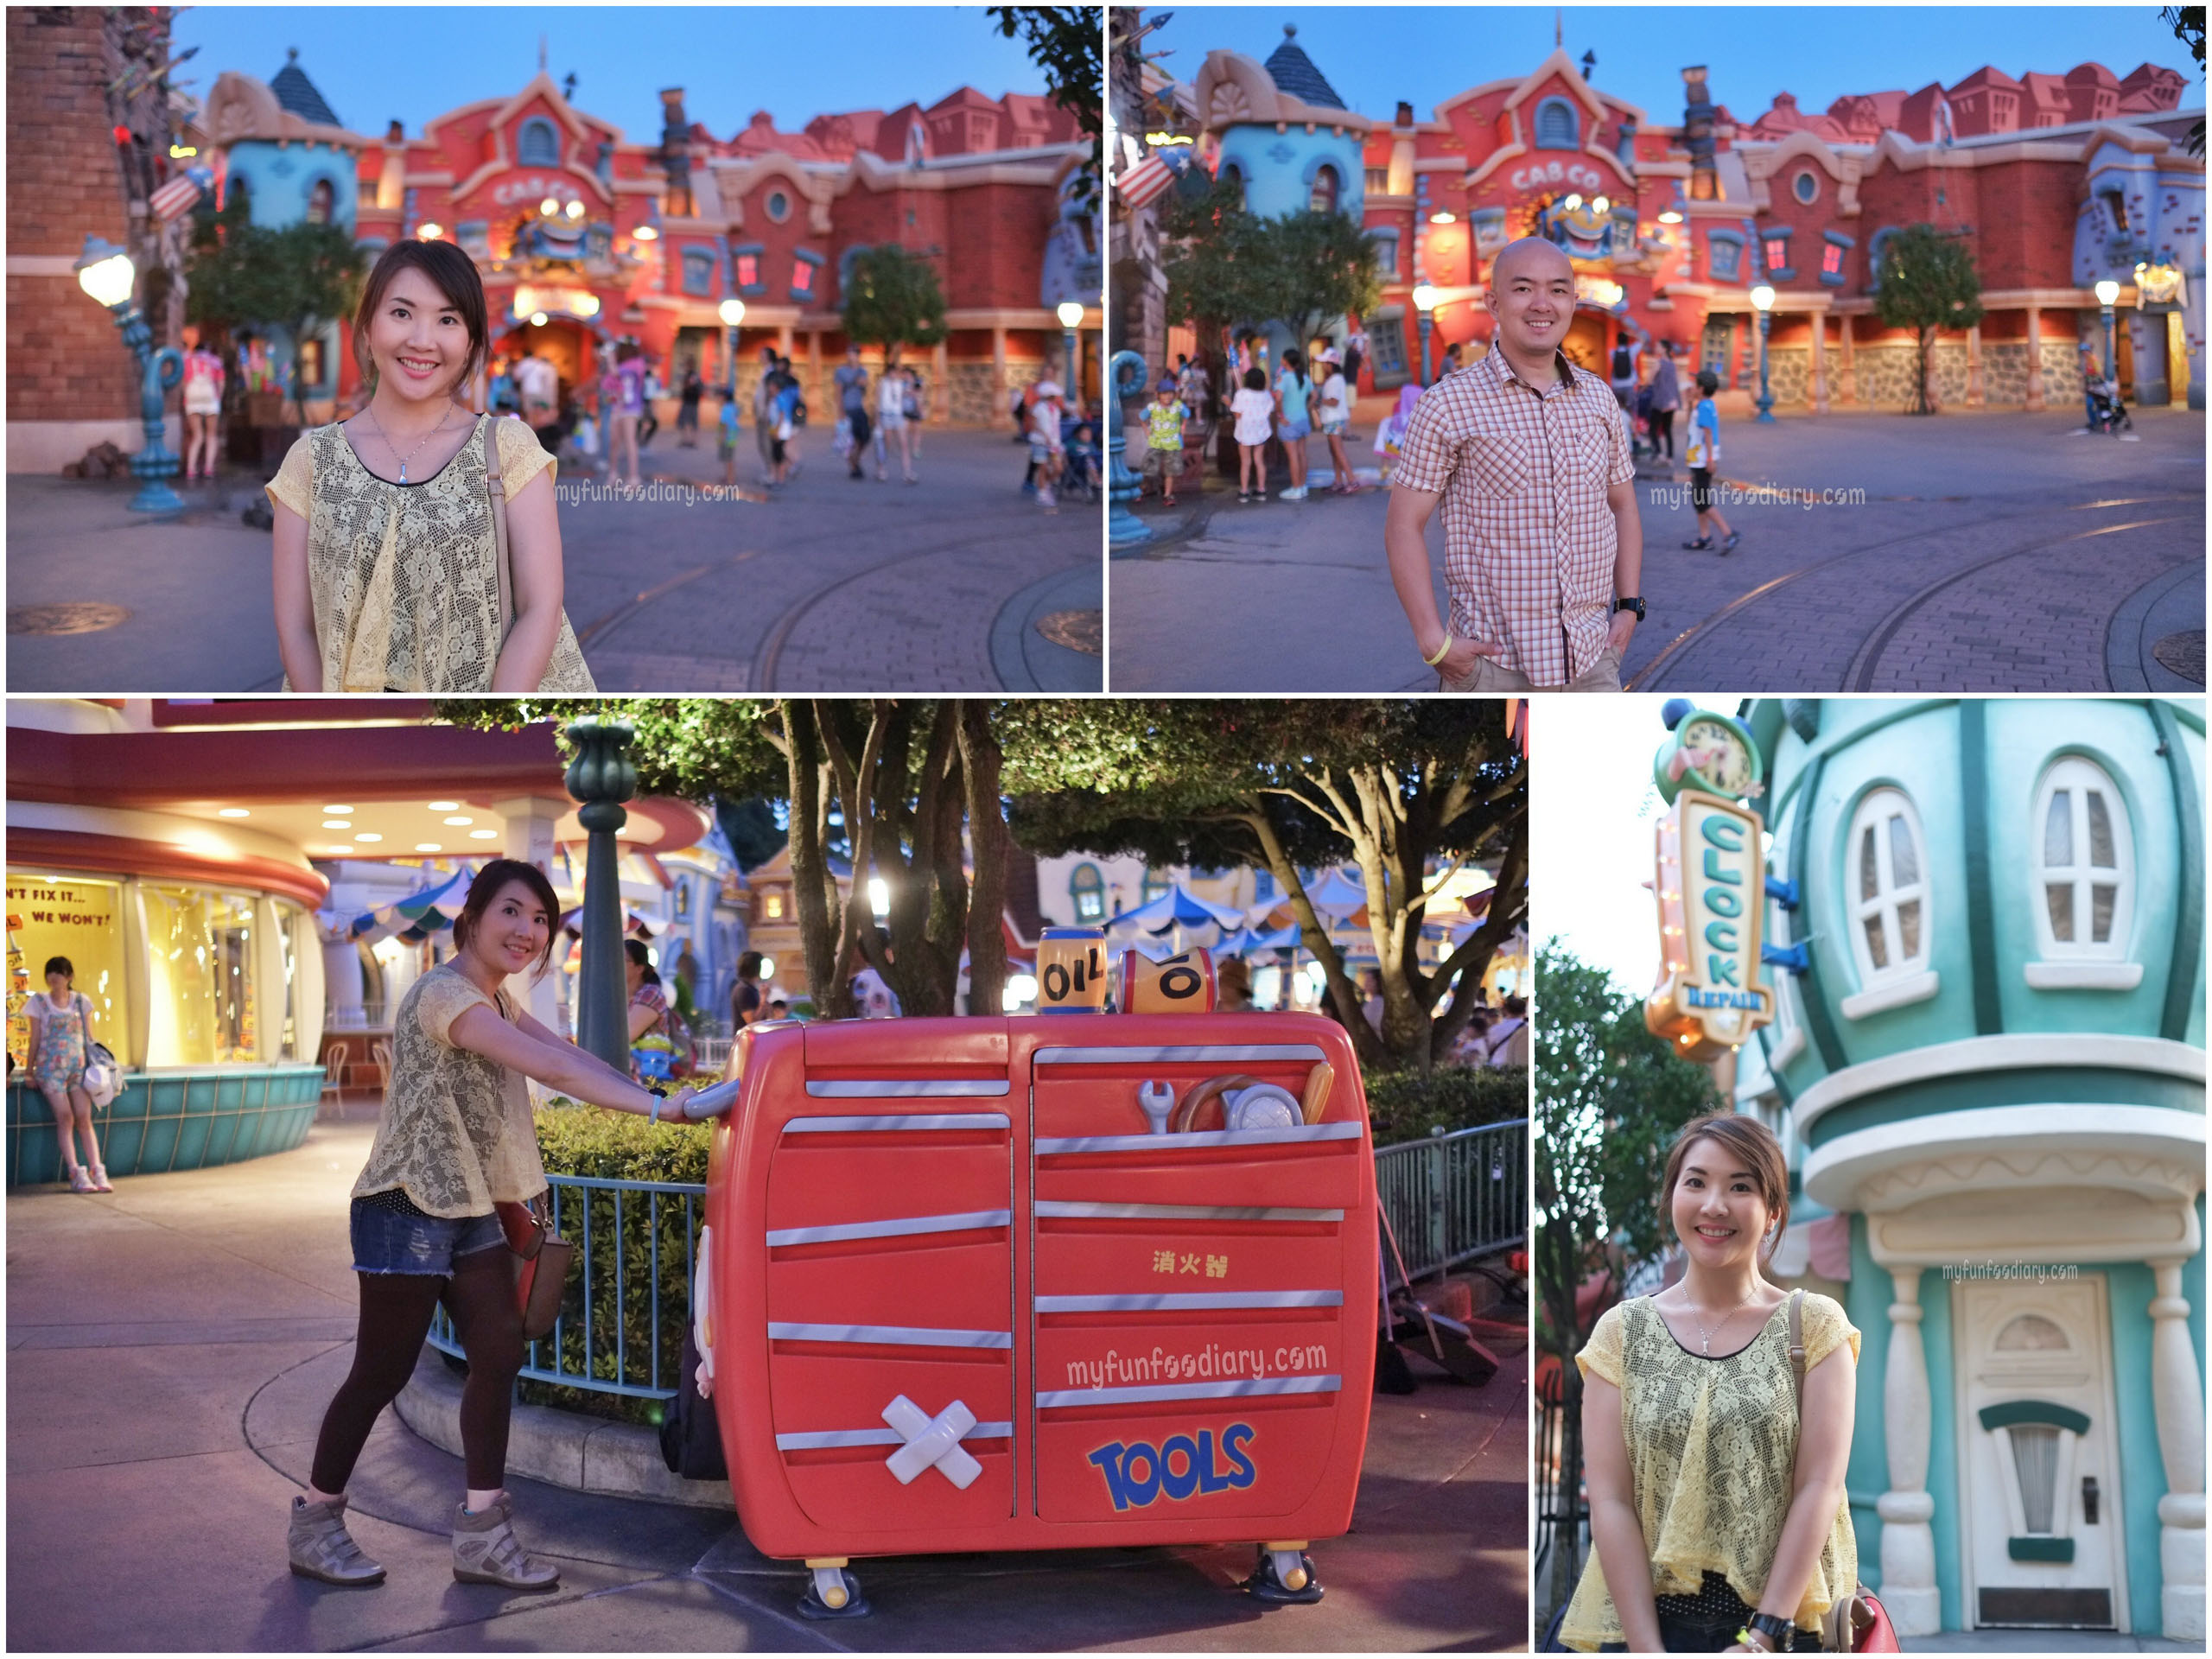 Fun at Toon Town Tokyo Disneyland by Myfunfoodiary 02